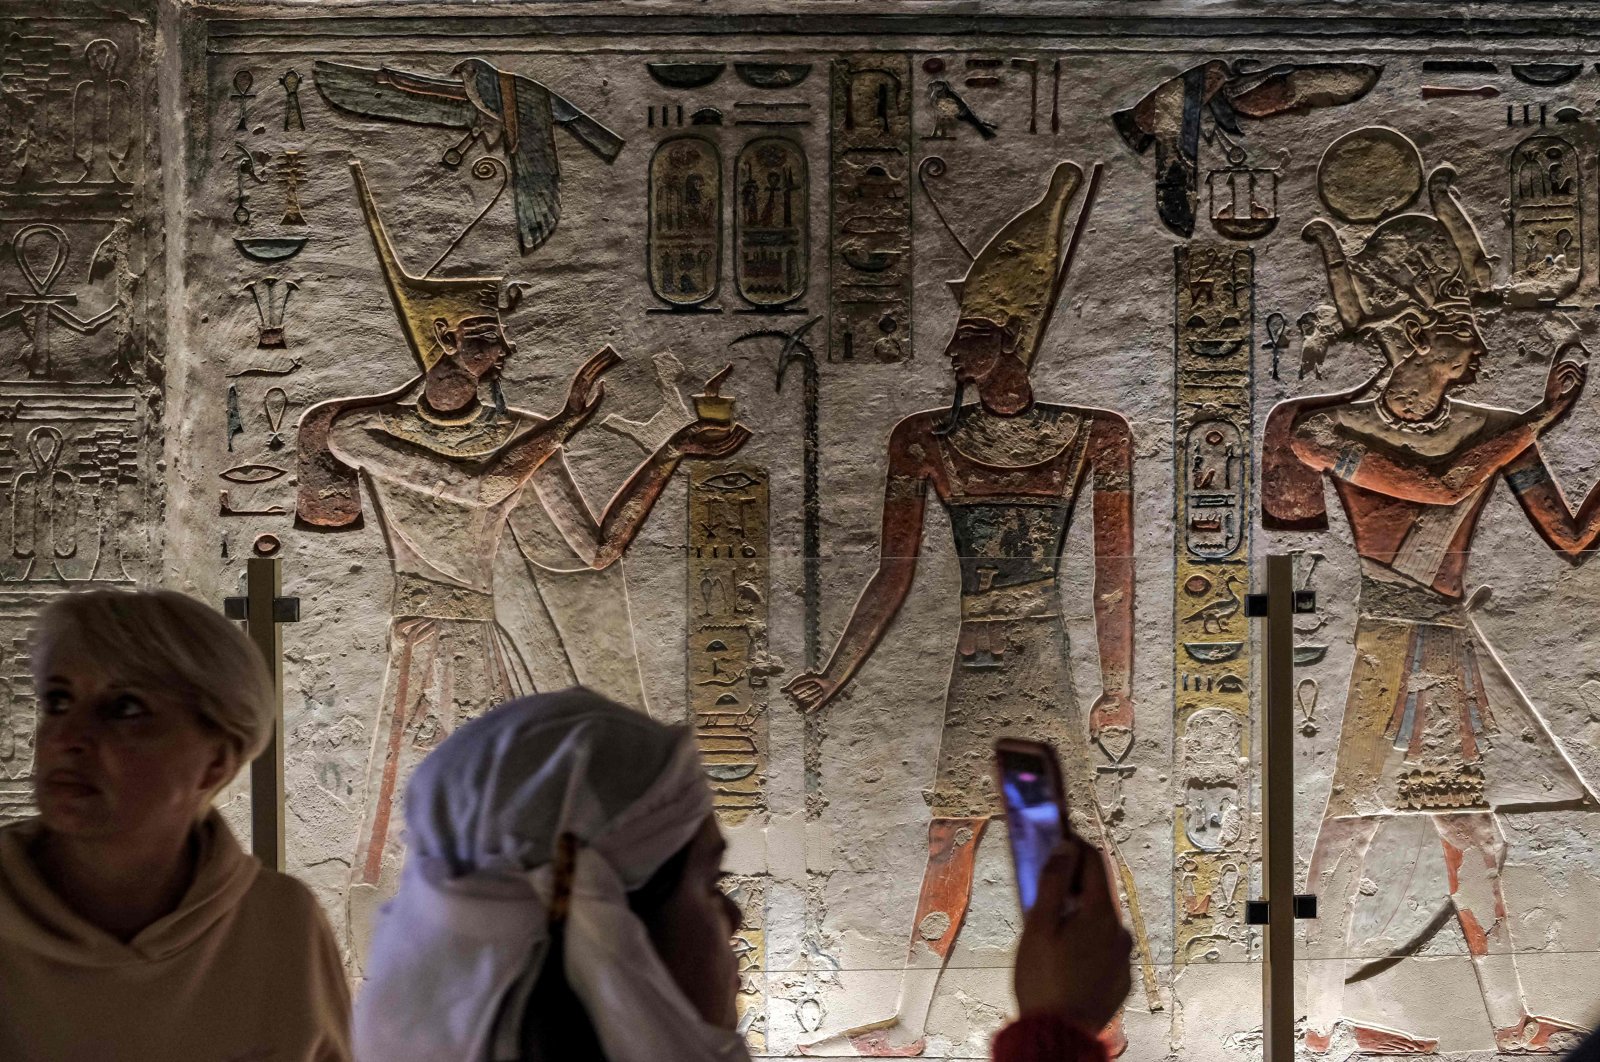 Mesir akan memulihkan 3 harta karun yang hilang untuk museum arkeologi terbesar